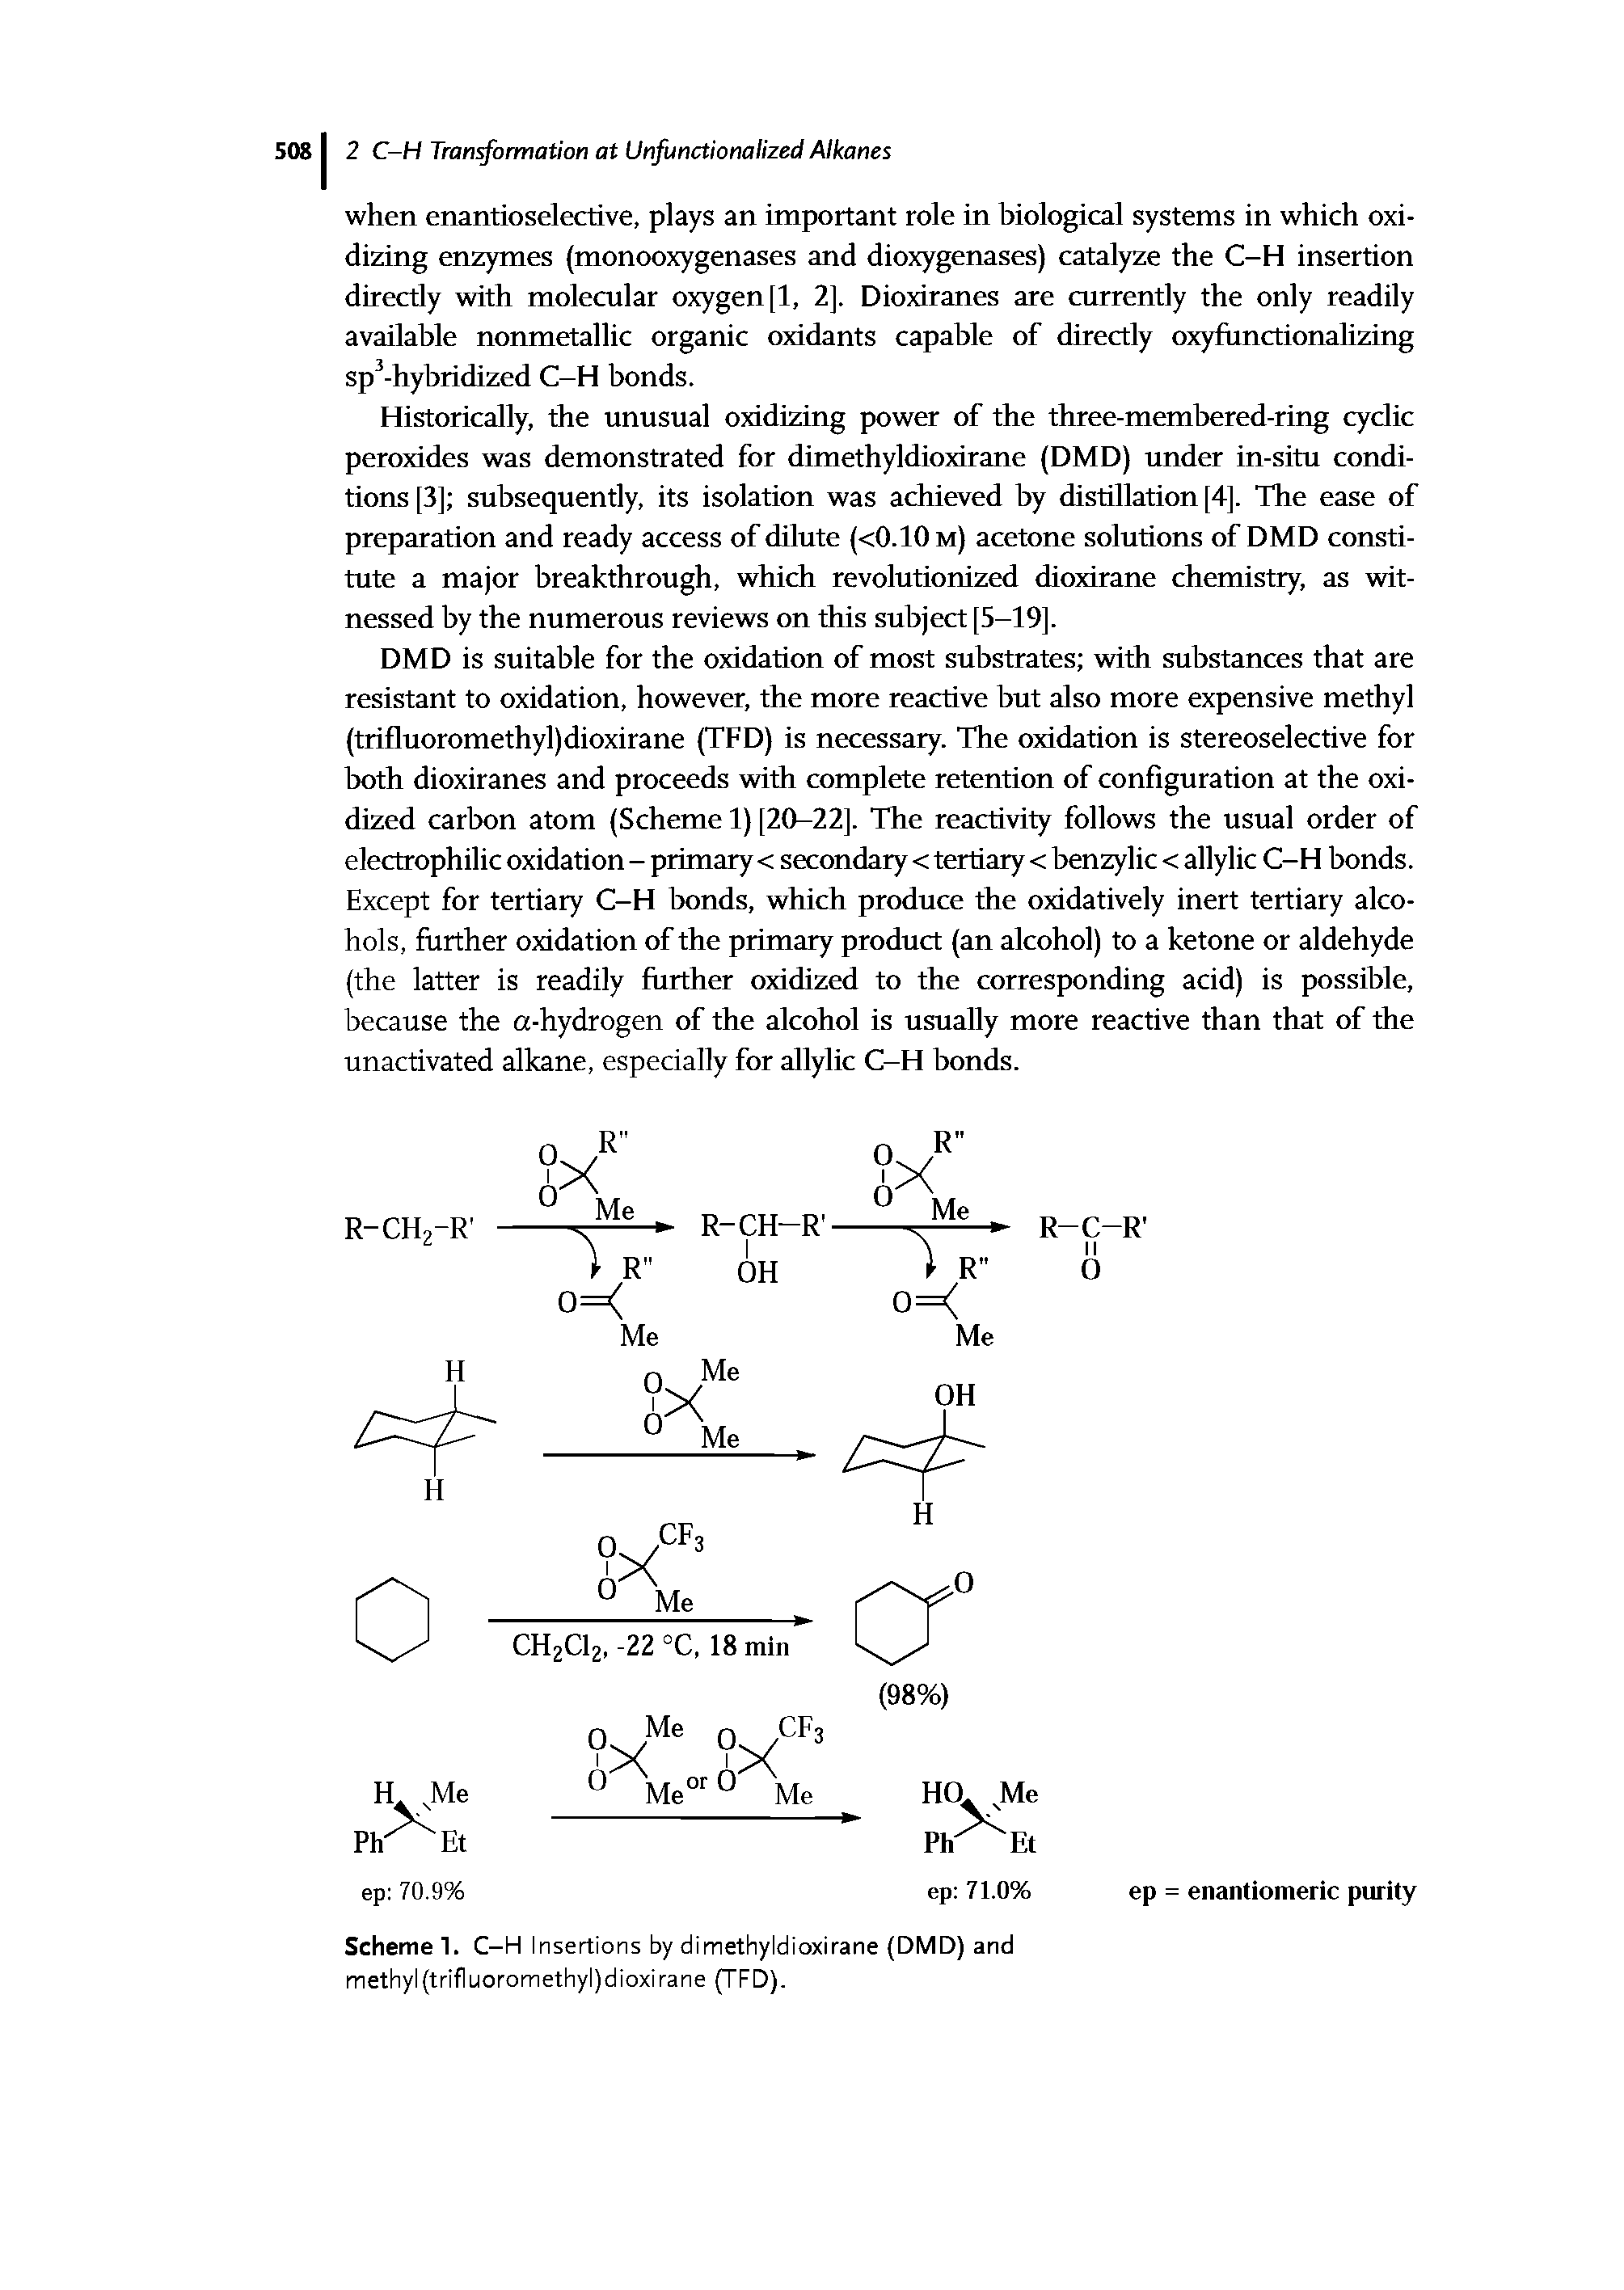 Scheme 1. C-H Insertions by dimethyldioxirane (DMD) and methyl(trifluoromethyl)dioxirane (TFD).